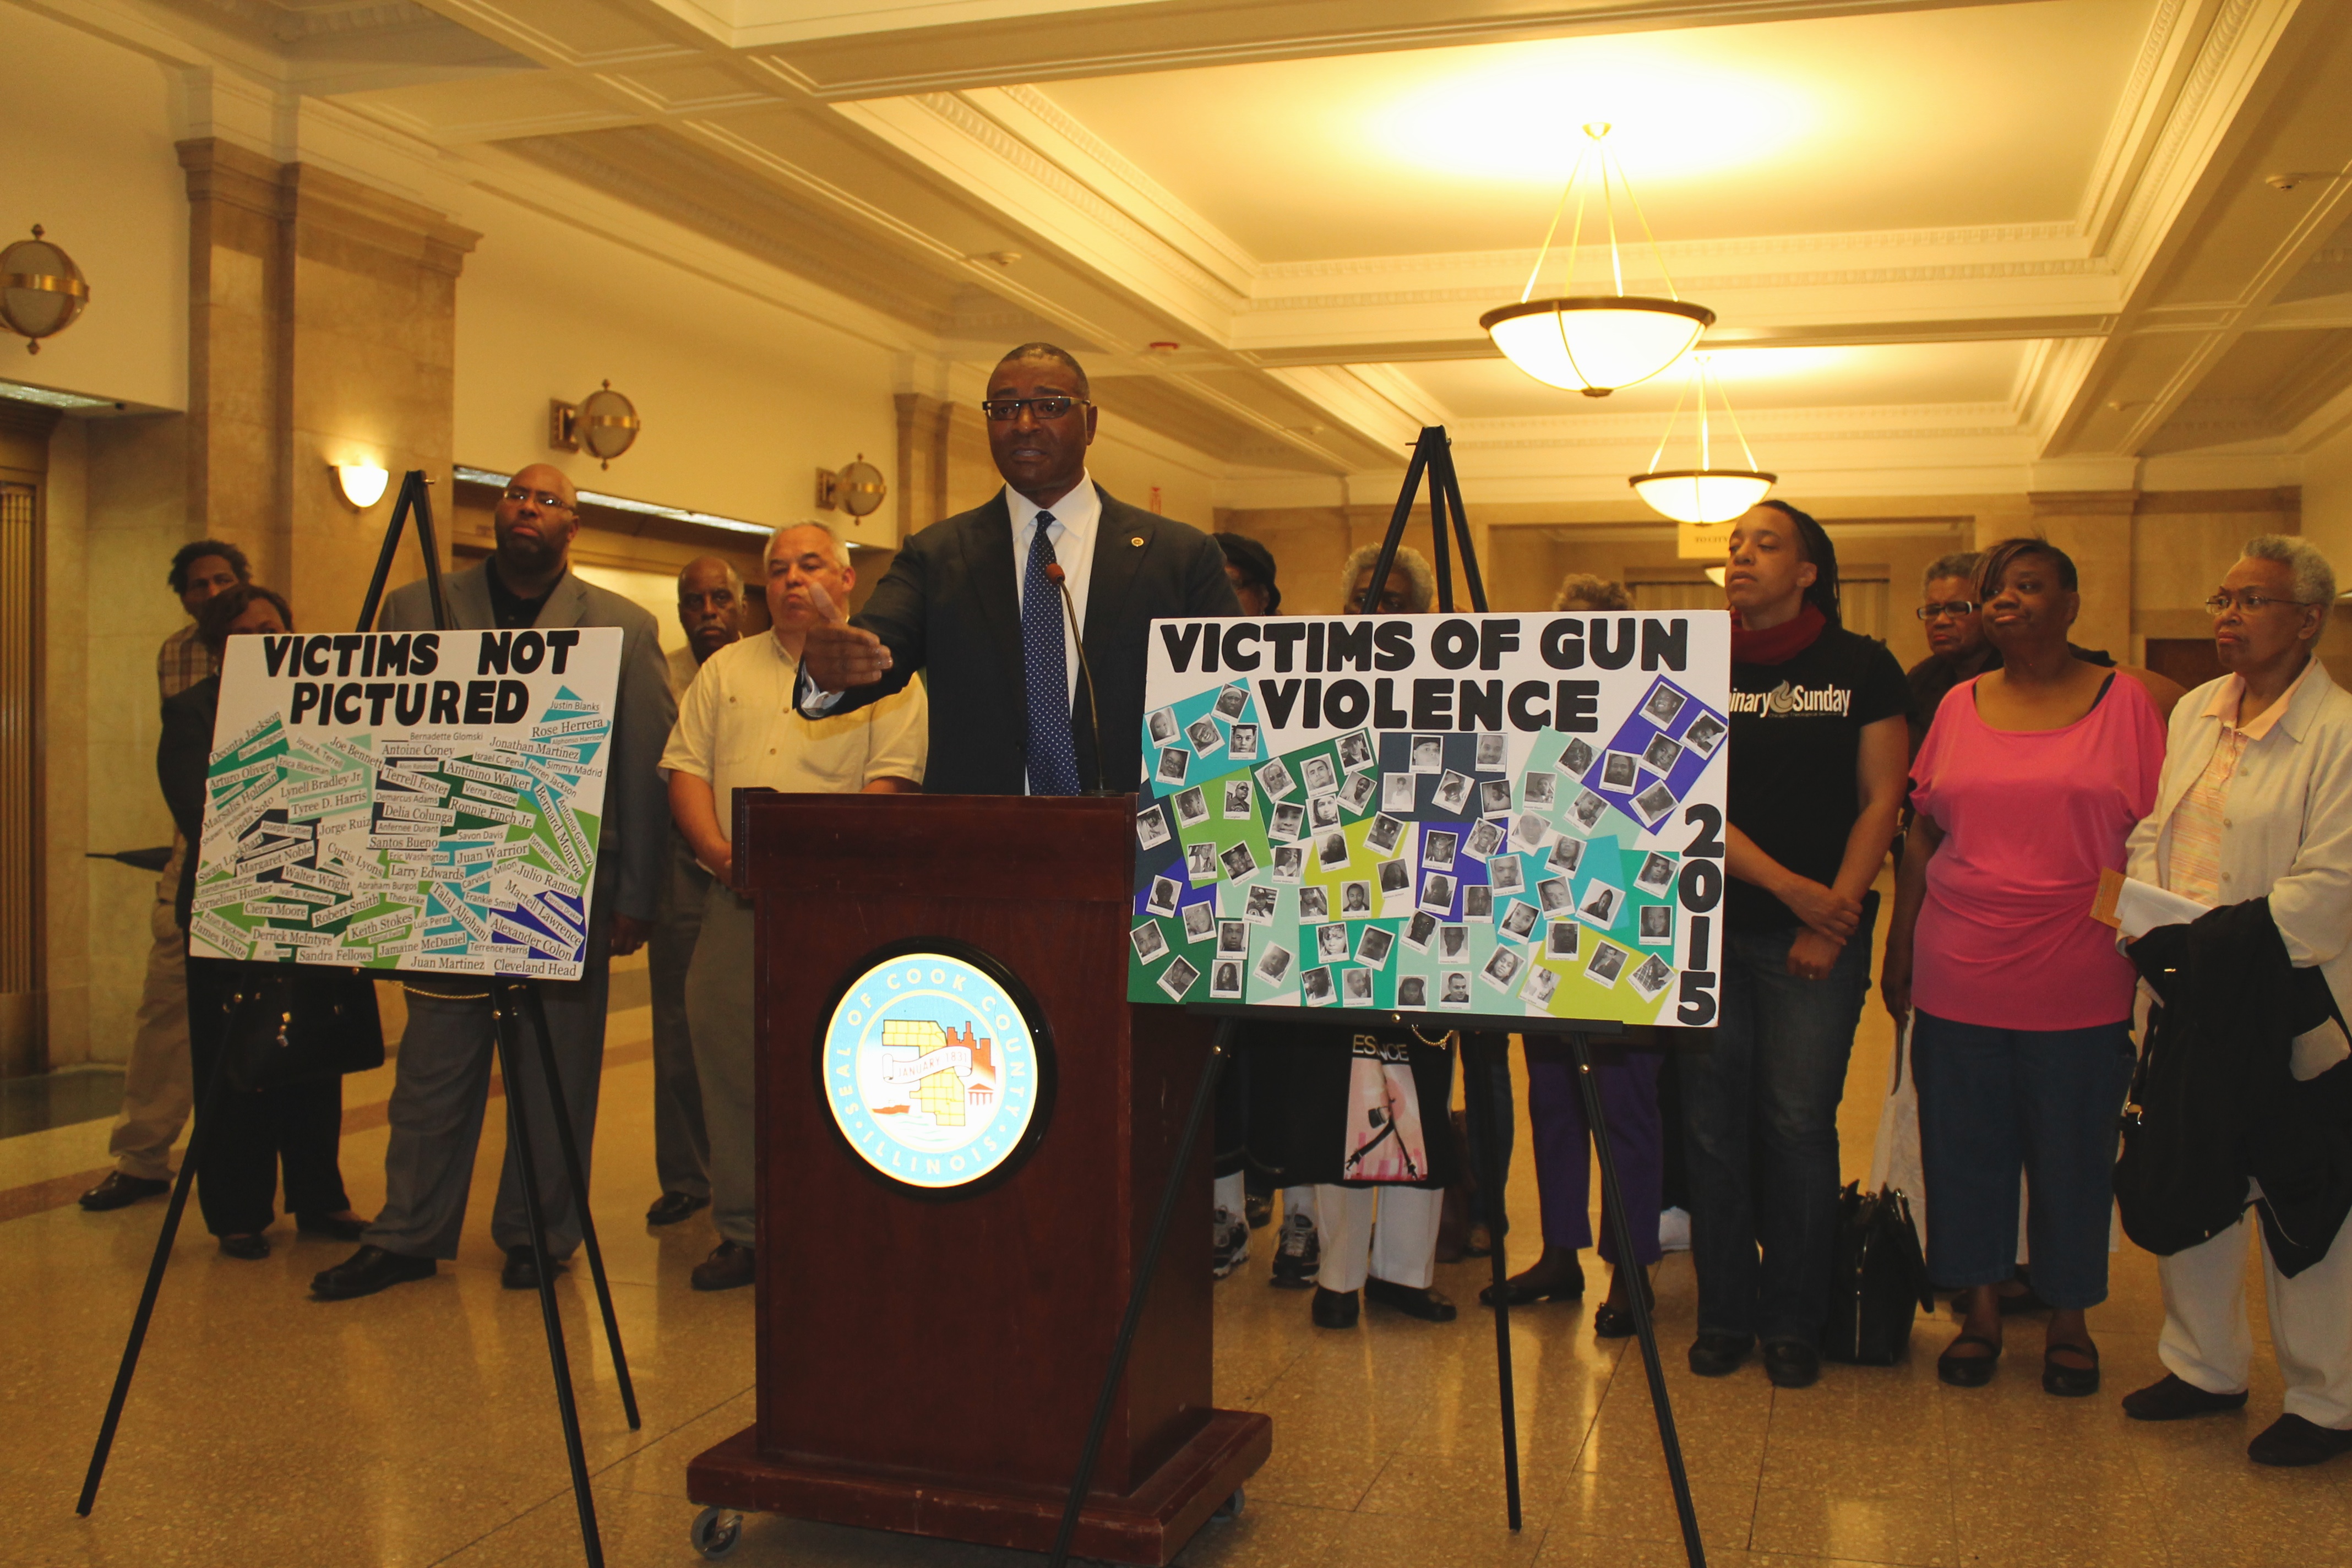 Senator Boykin presents illustrative images that depict the lives lost to violence.